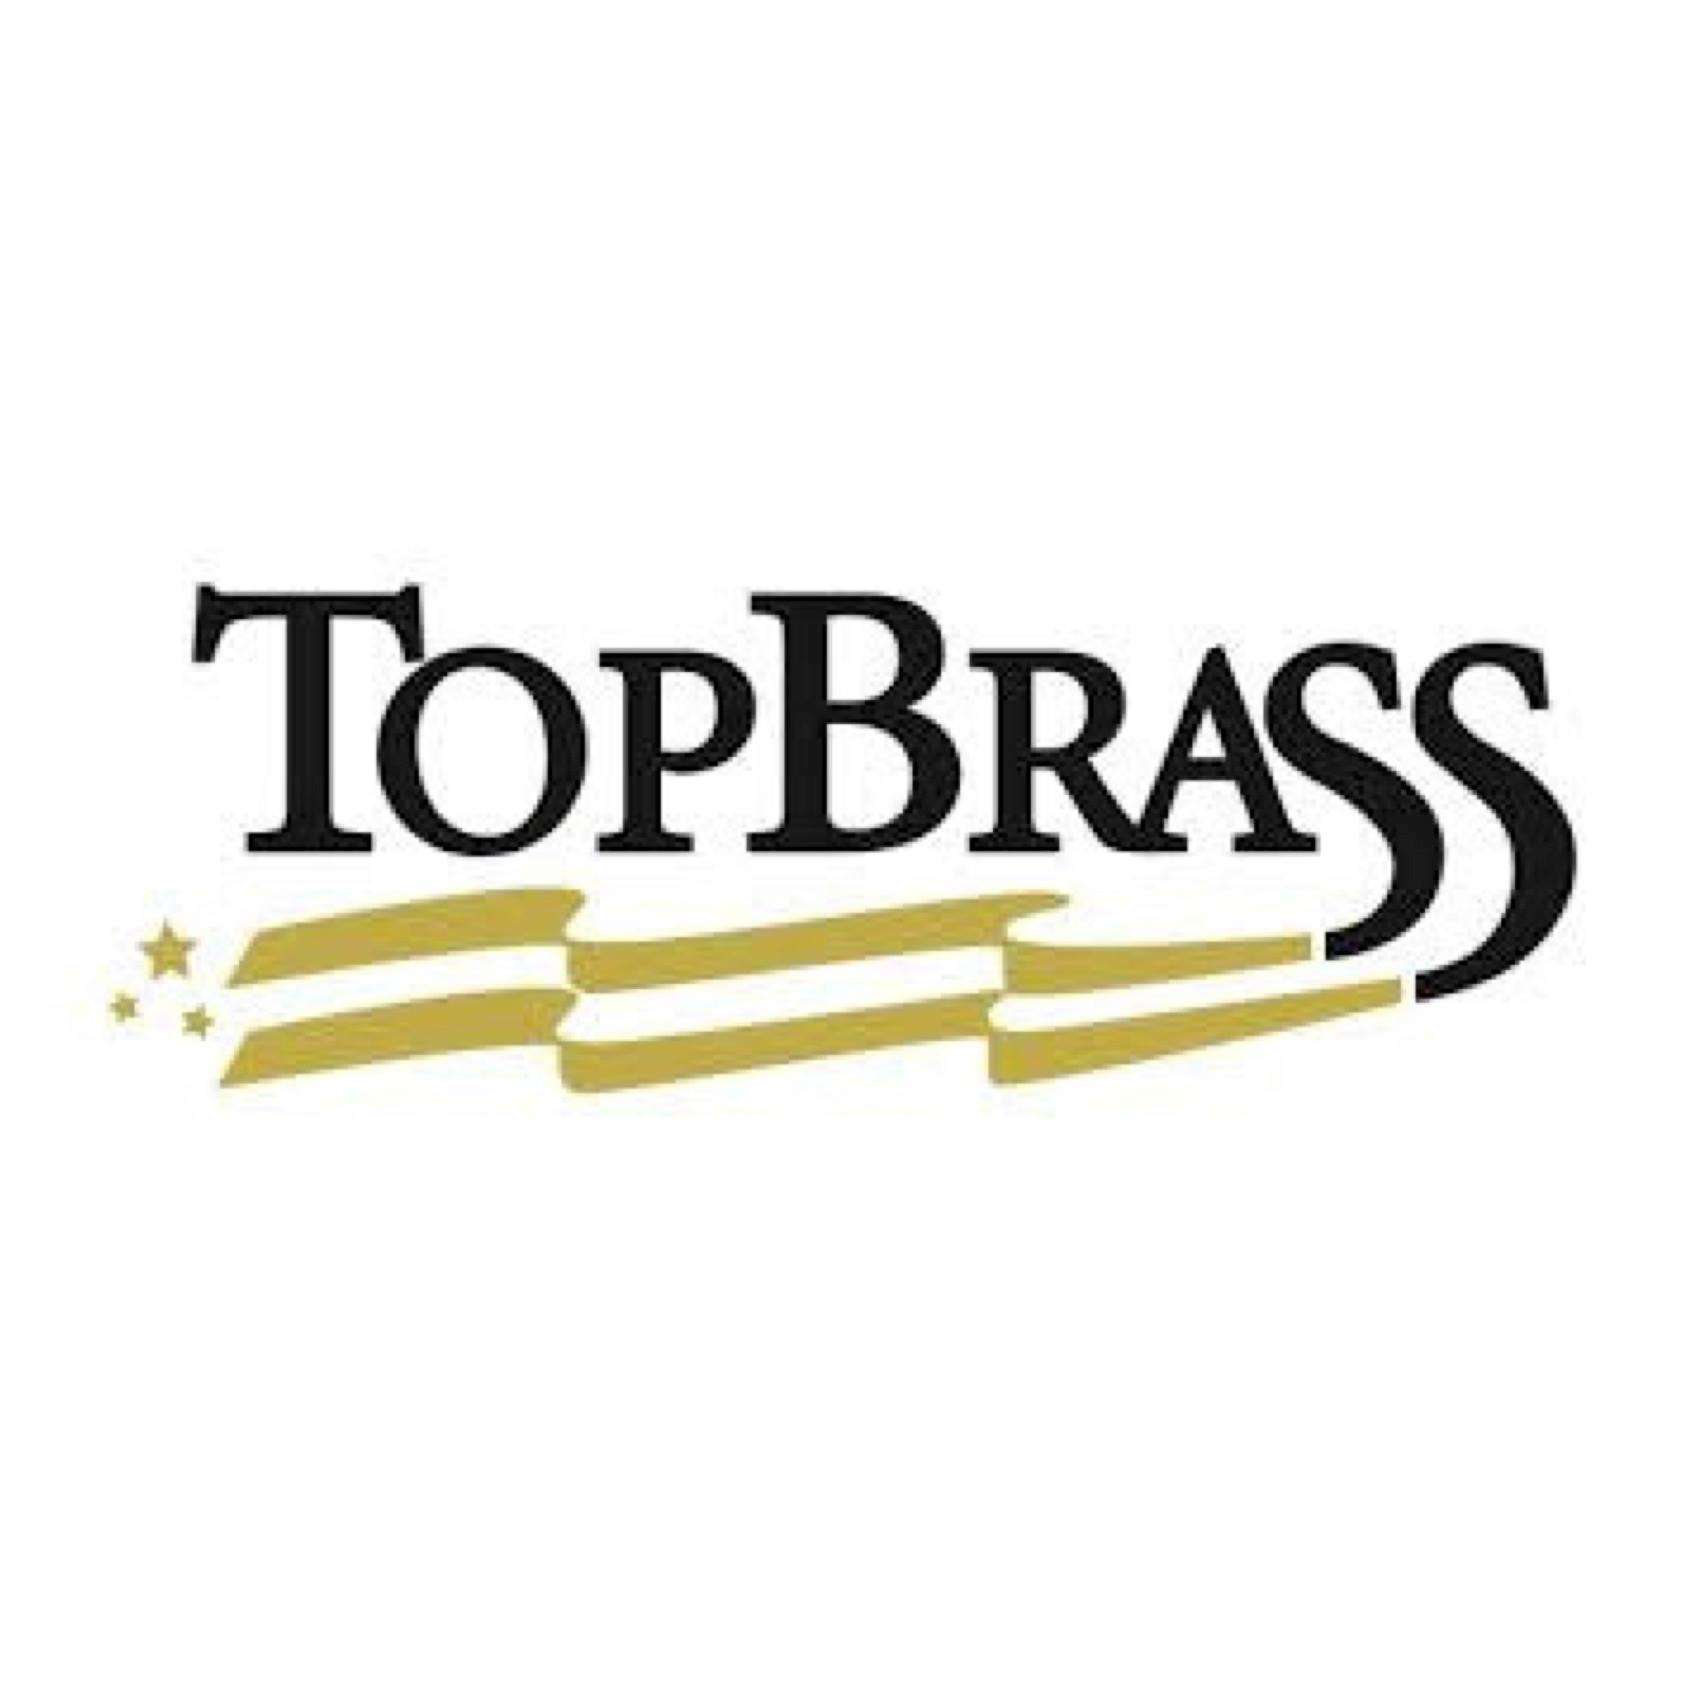 Top Brass - Crunchbase Company Profile & Funding